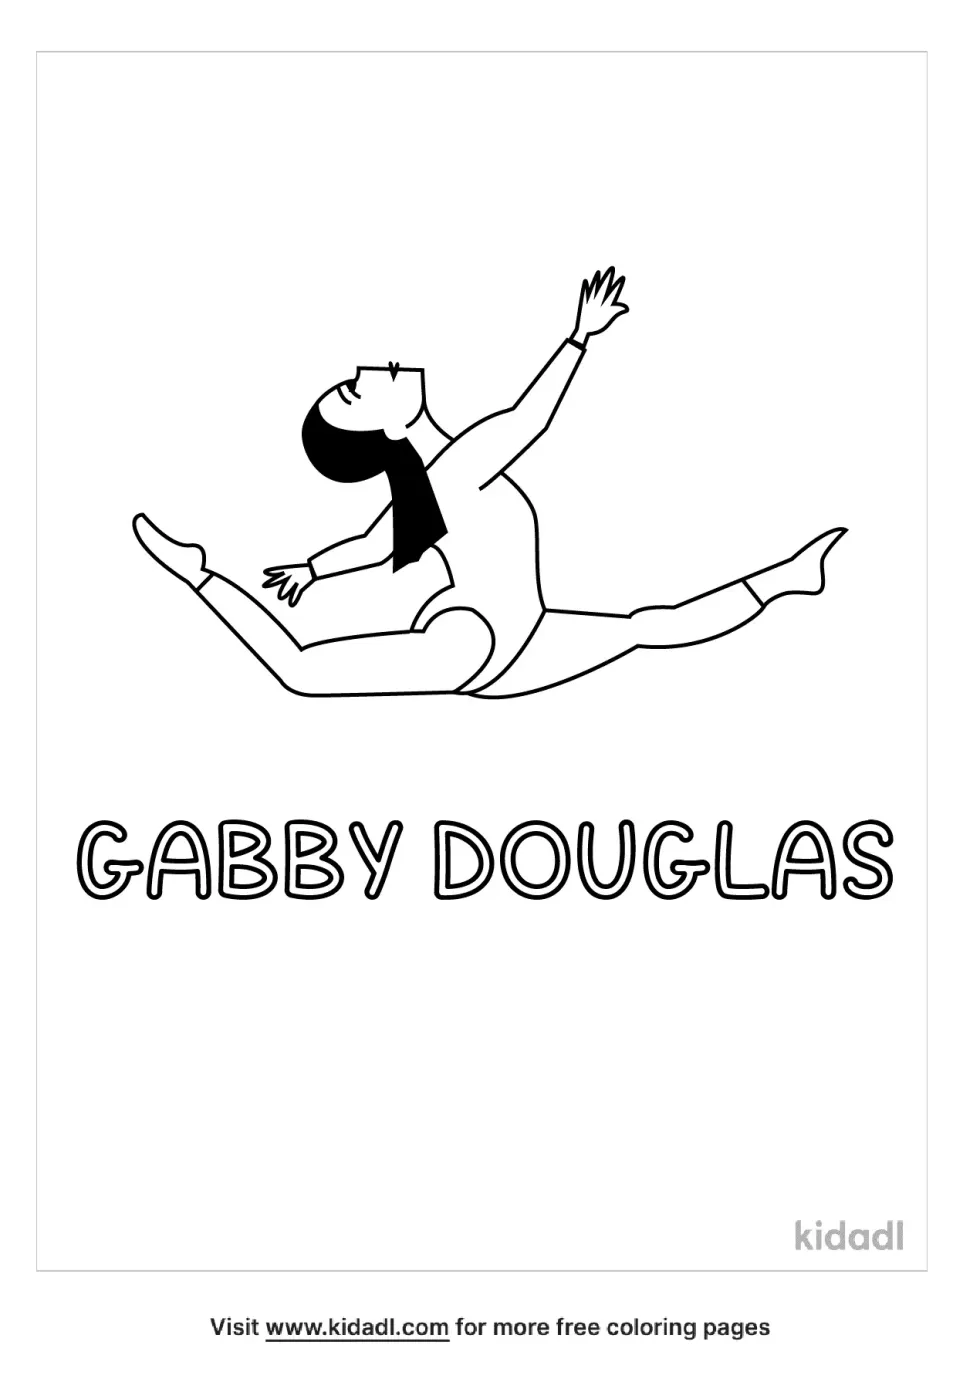 Gabby Douglas Coloring Page